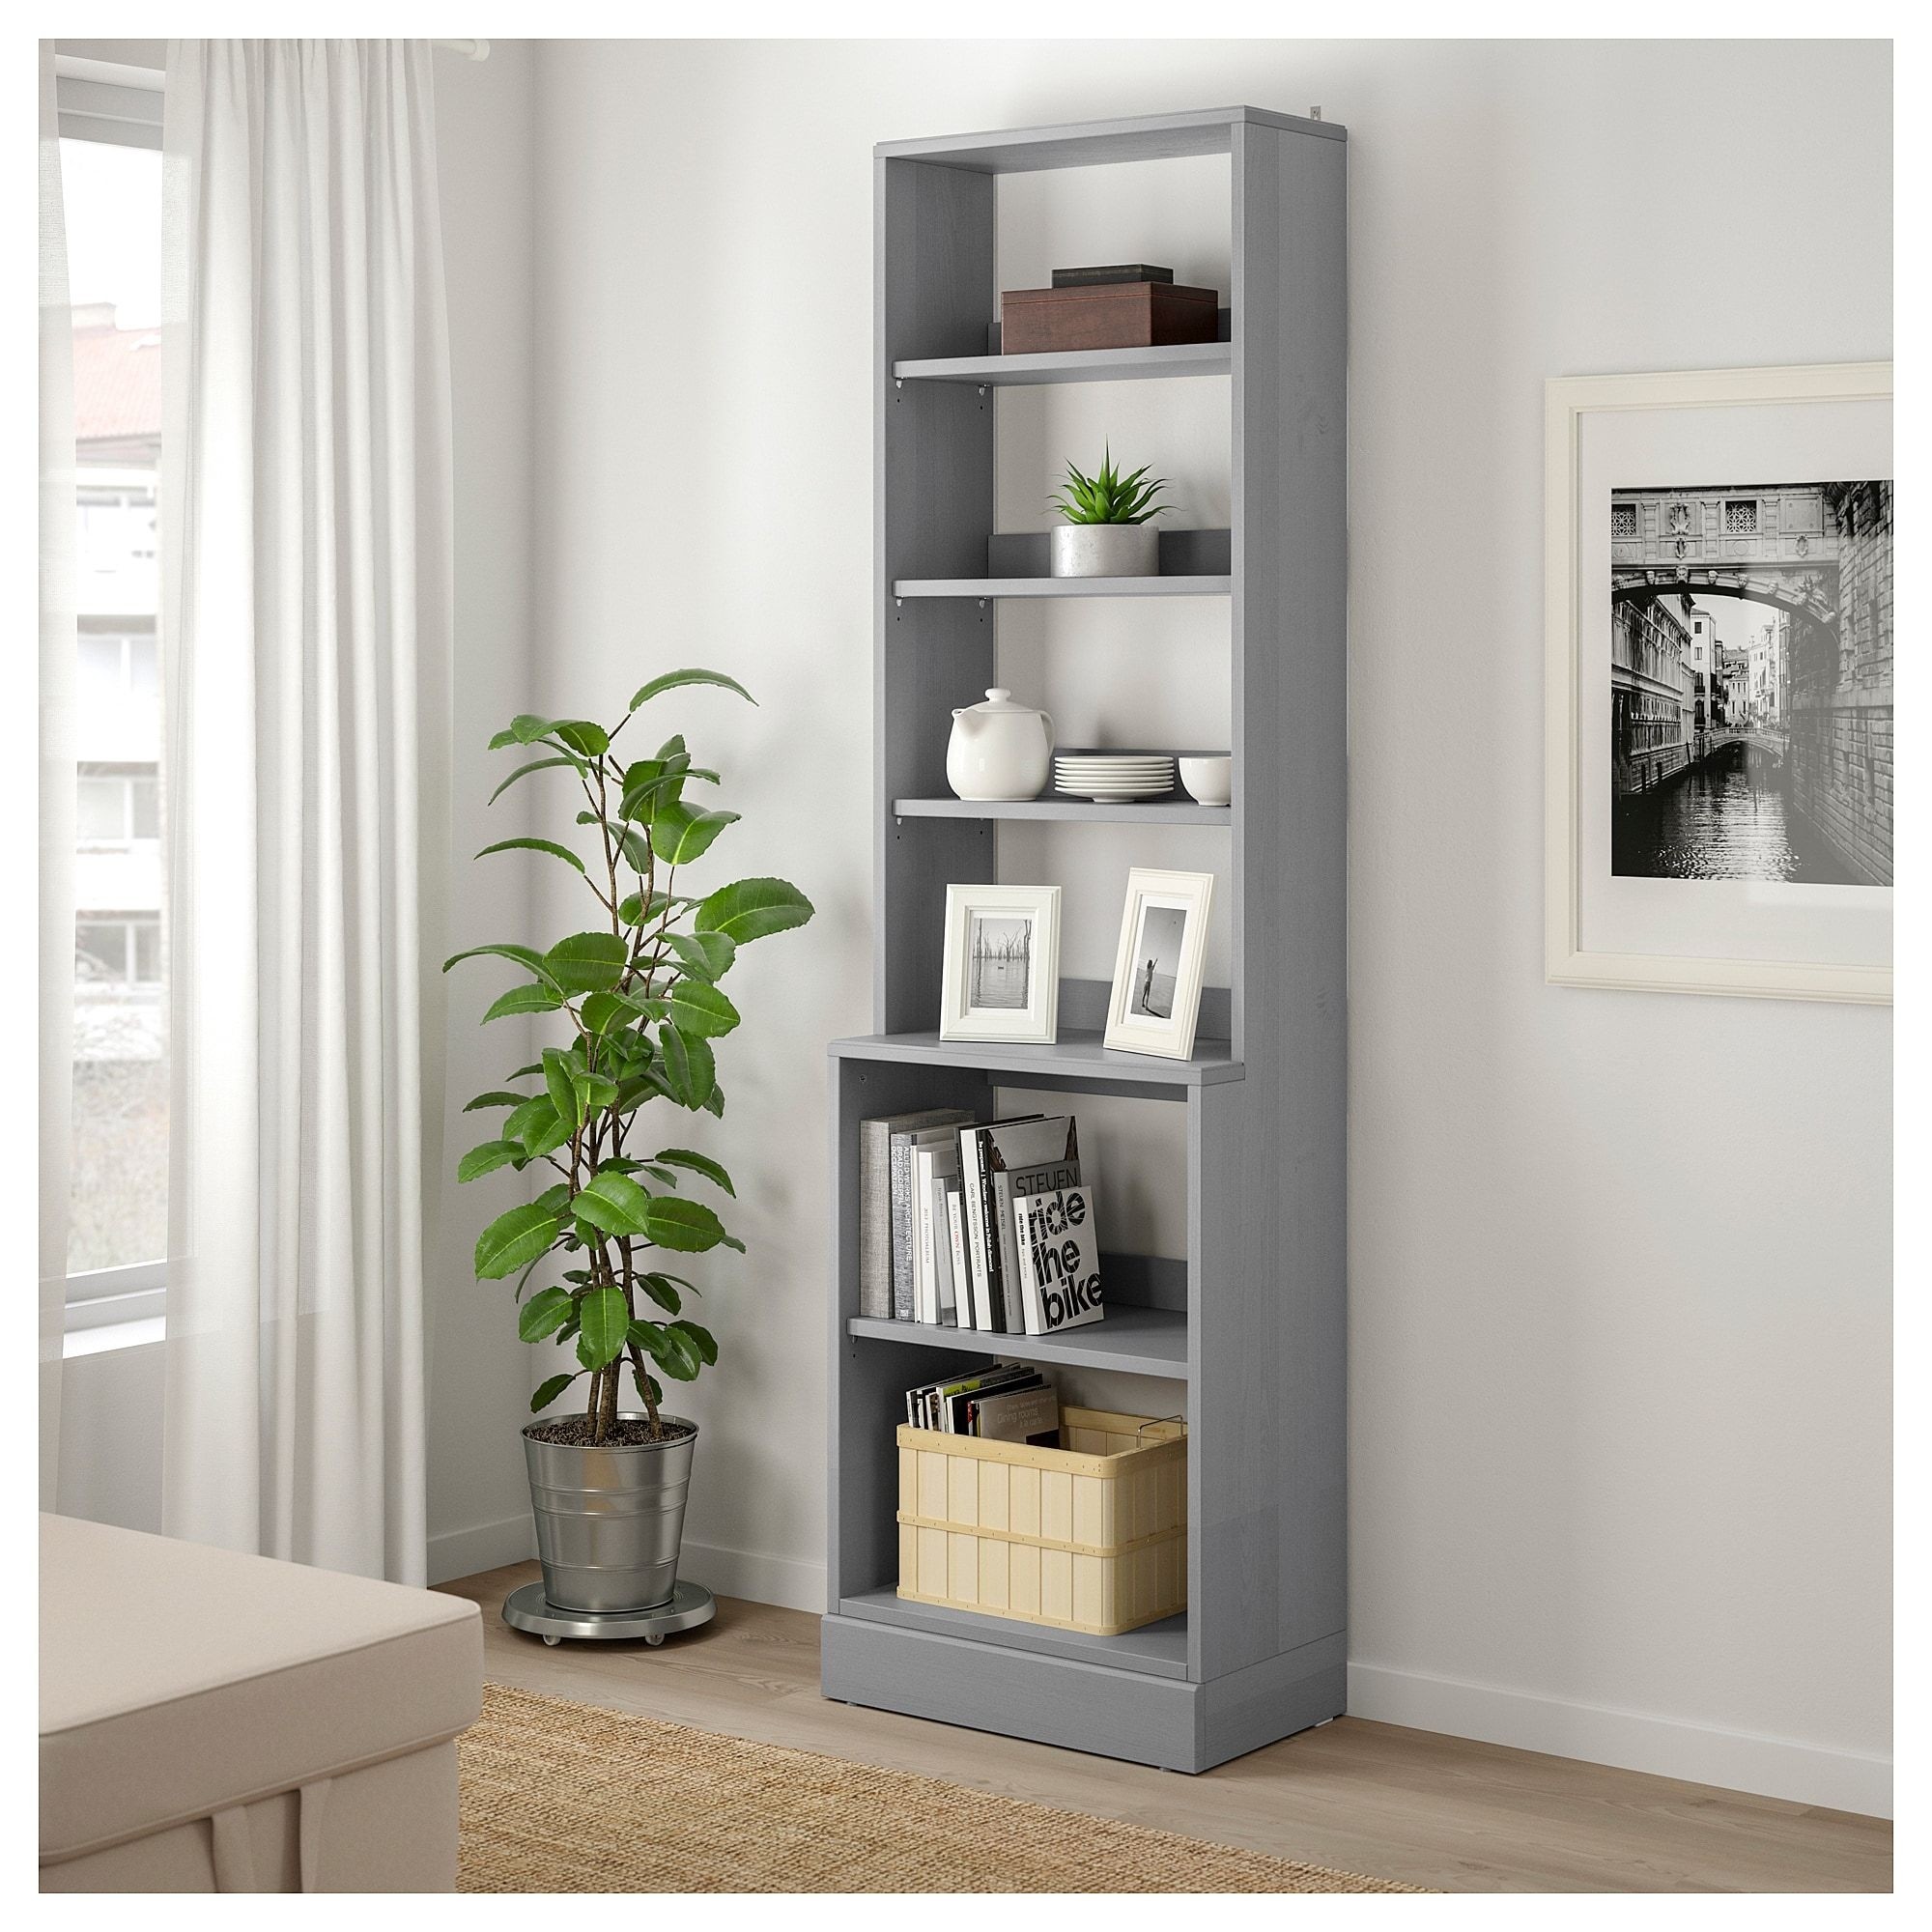 Ikea havsta shelving unit with base gray shelves